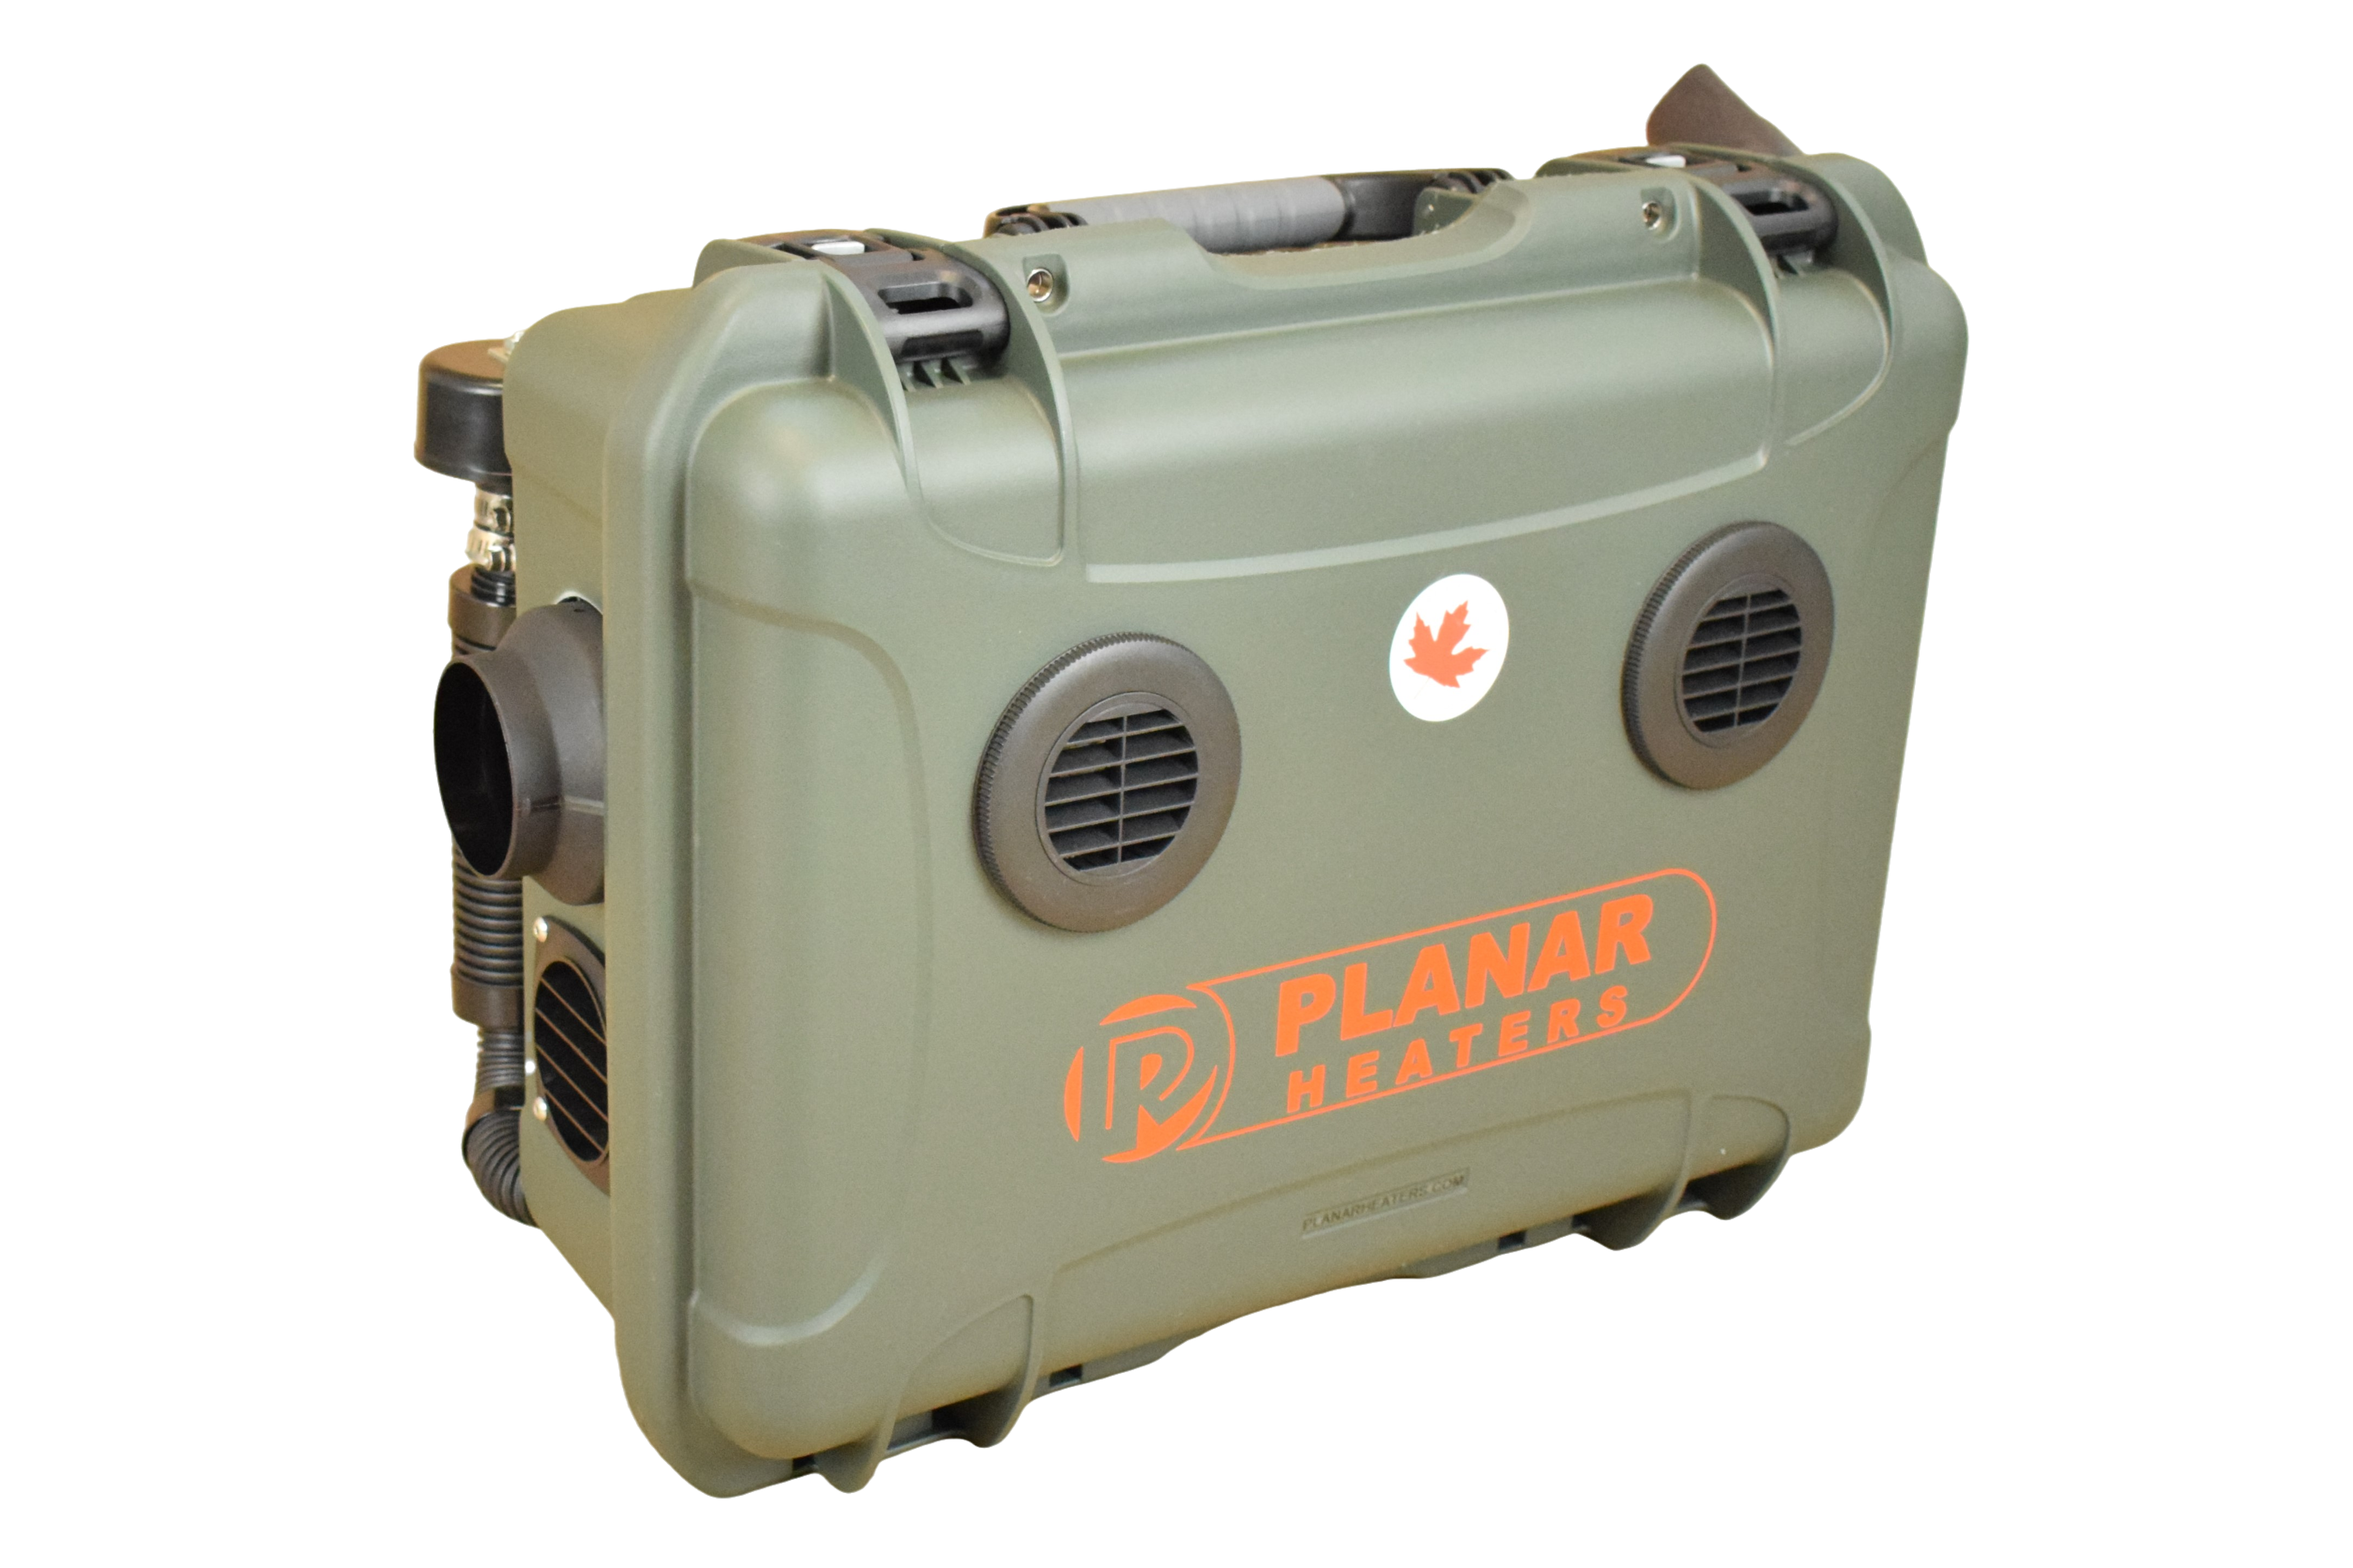 Planar Portable Diesel Air Heater 4D-12V (10ft Hose)